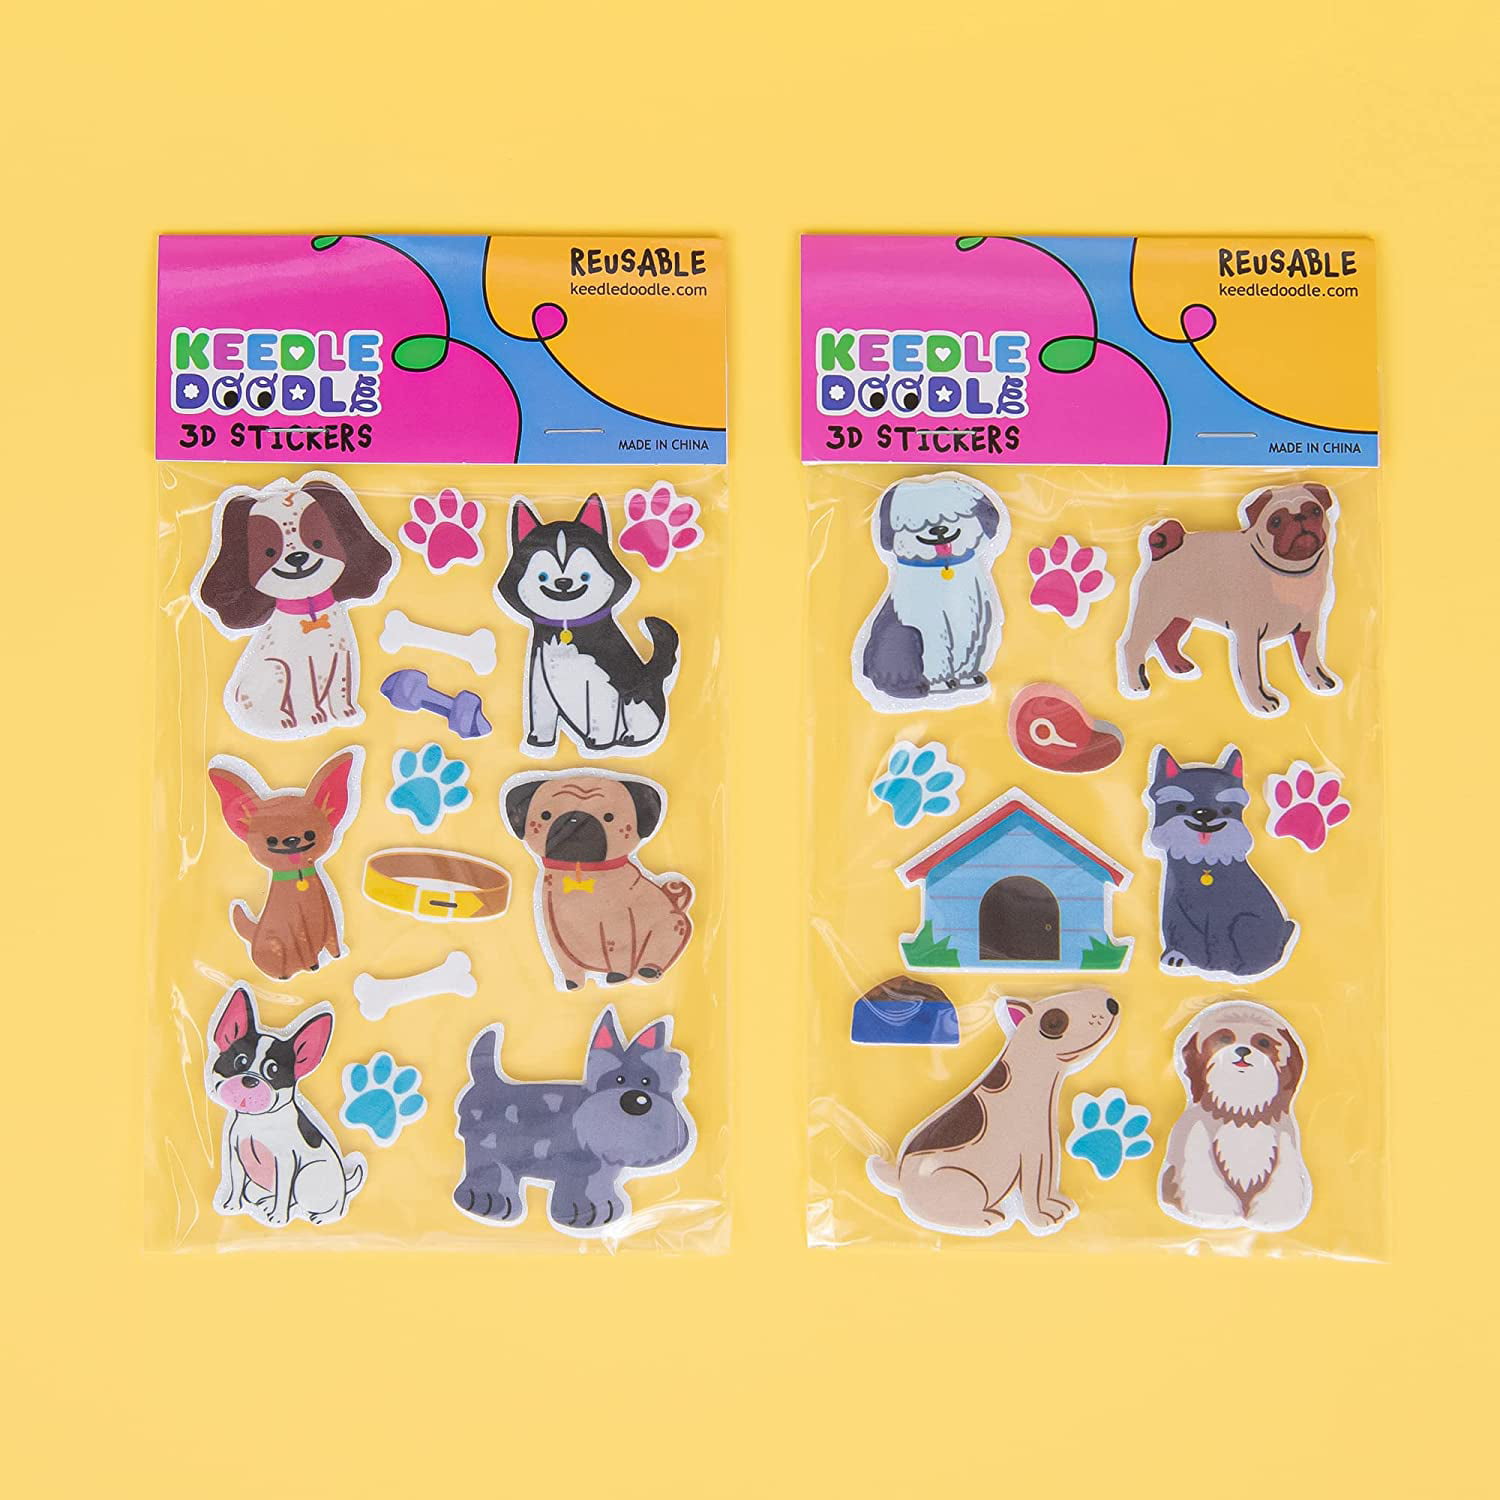 Cat & Dog Puffy Stickers by Creatology™